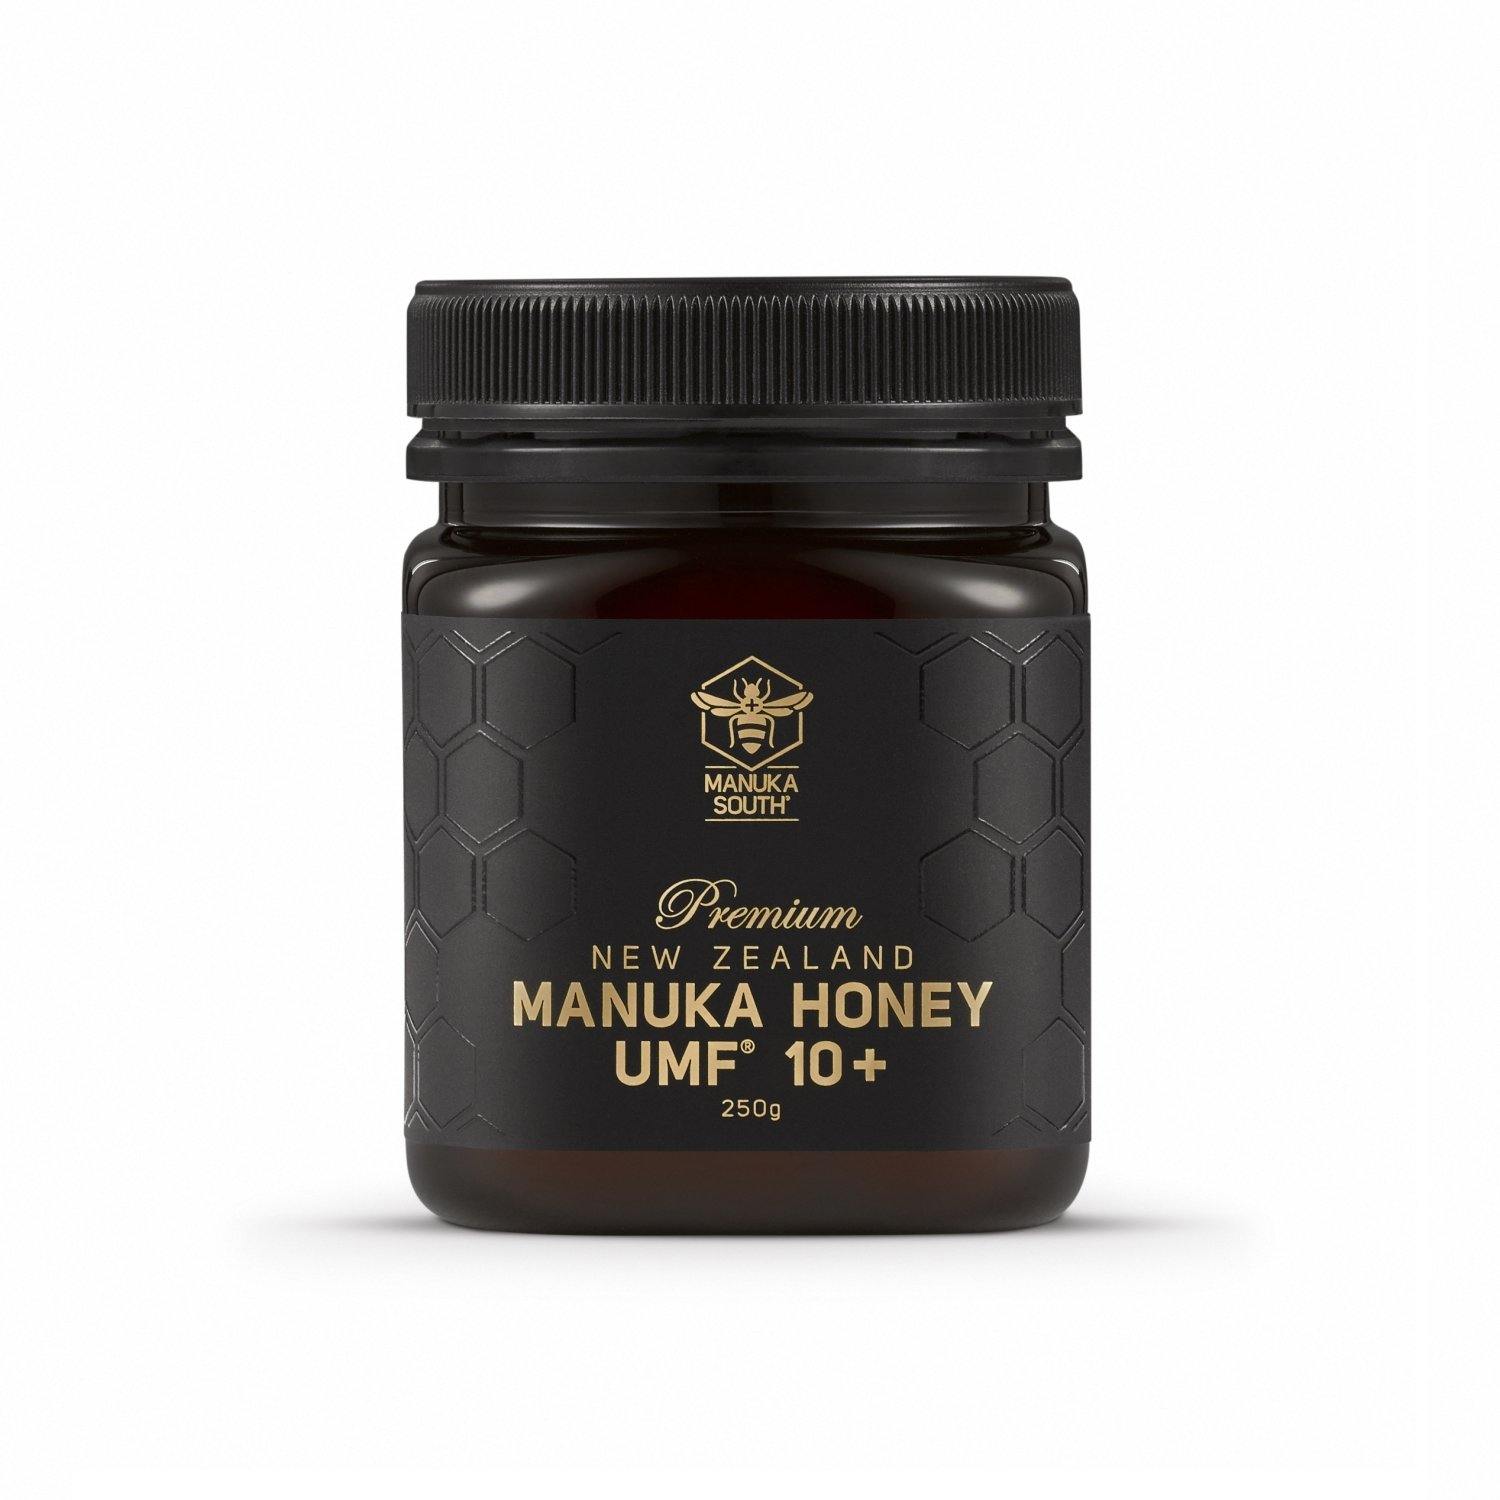 Manuka South Manuka Honey UMF10+ 250g - Function: Immune Support, Ingredient: Manuka Honey, nz made, Price  $7-$50, stomach, Vendor  Manuka South - Aotea Wellness